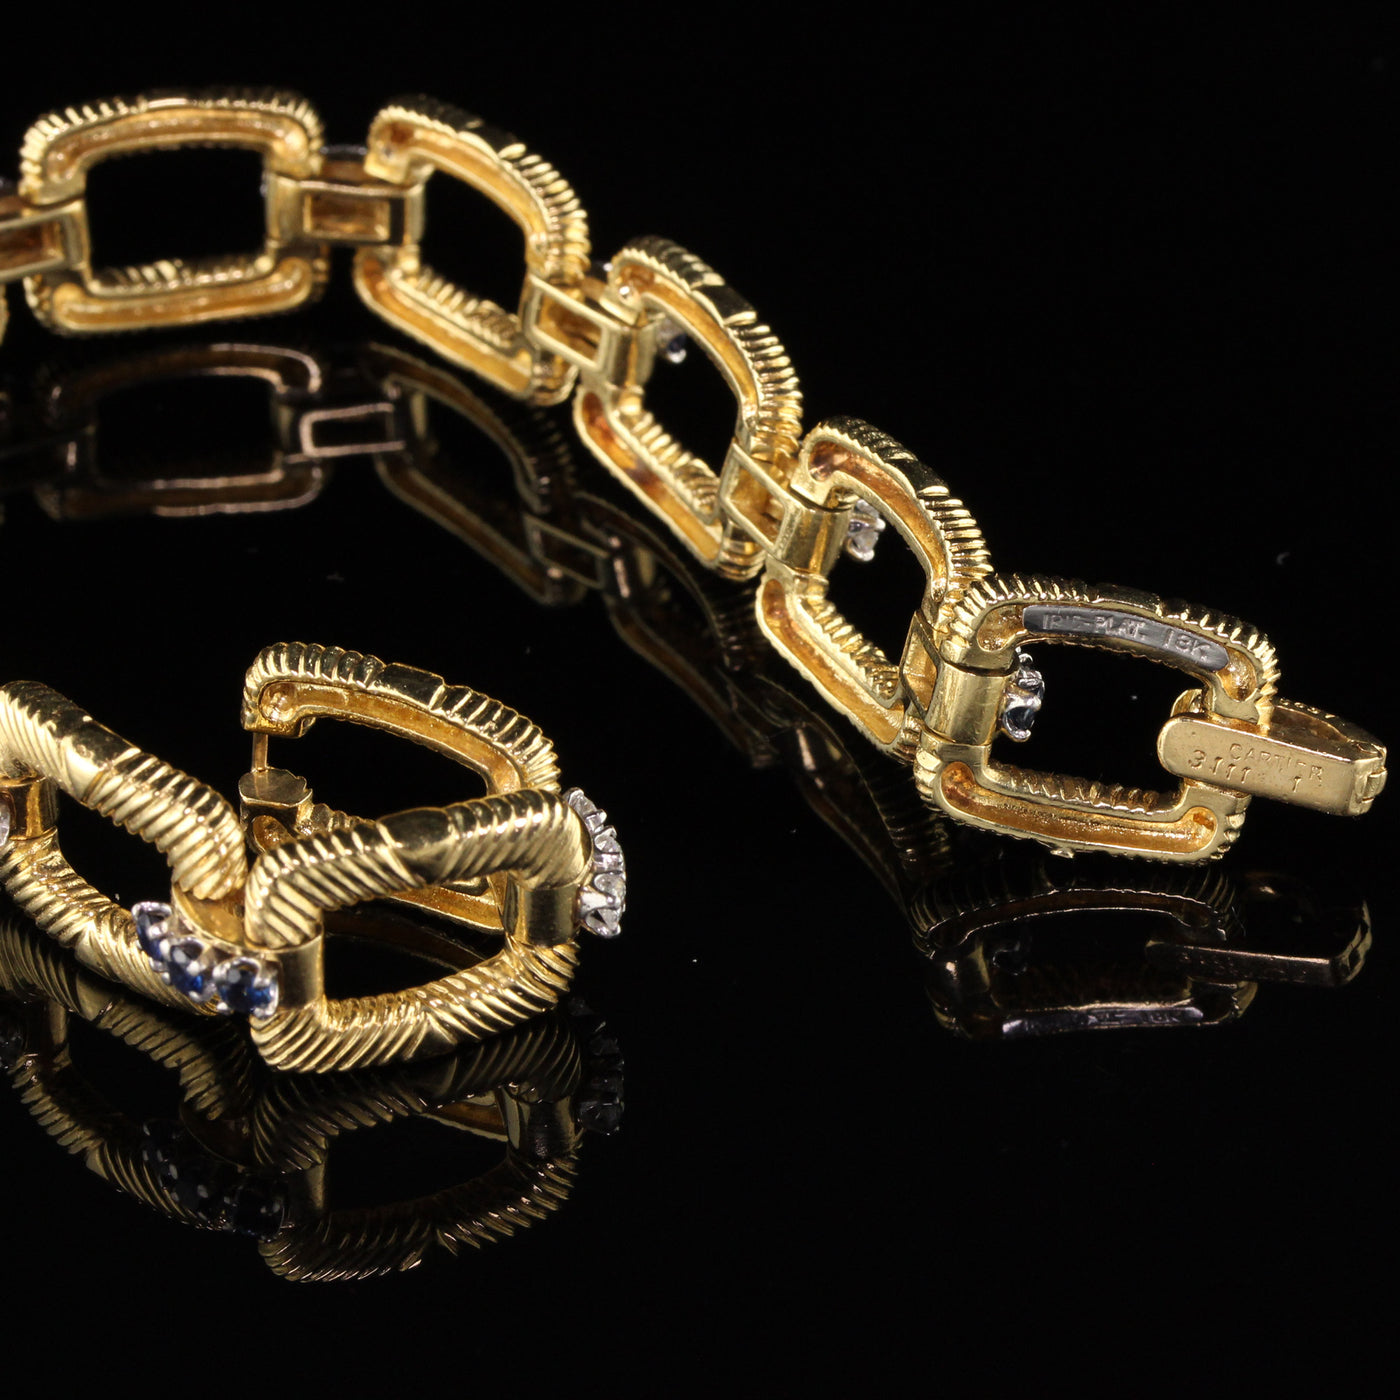 Cartier Platinum and 18 Karat Yellow Gold Diamond and Sapphire Bracelet